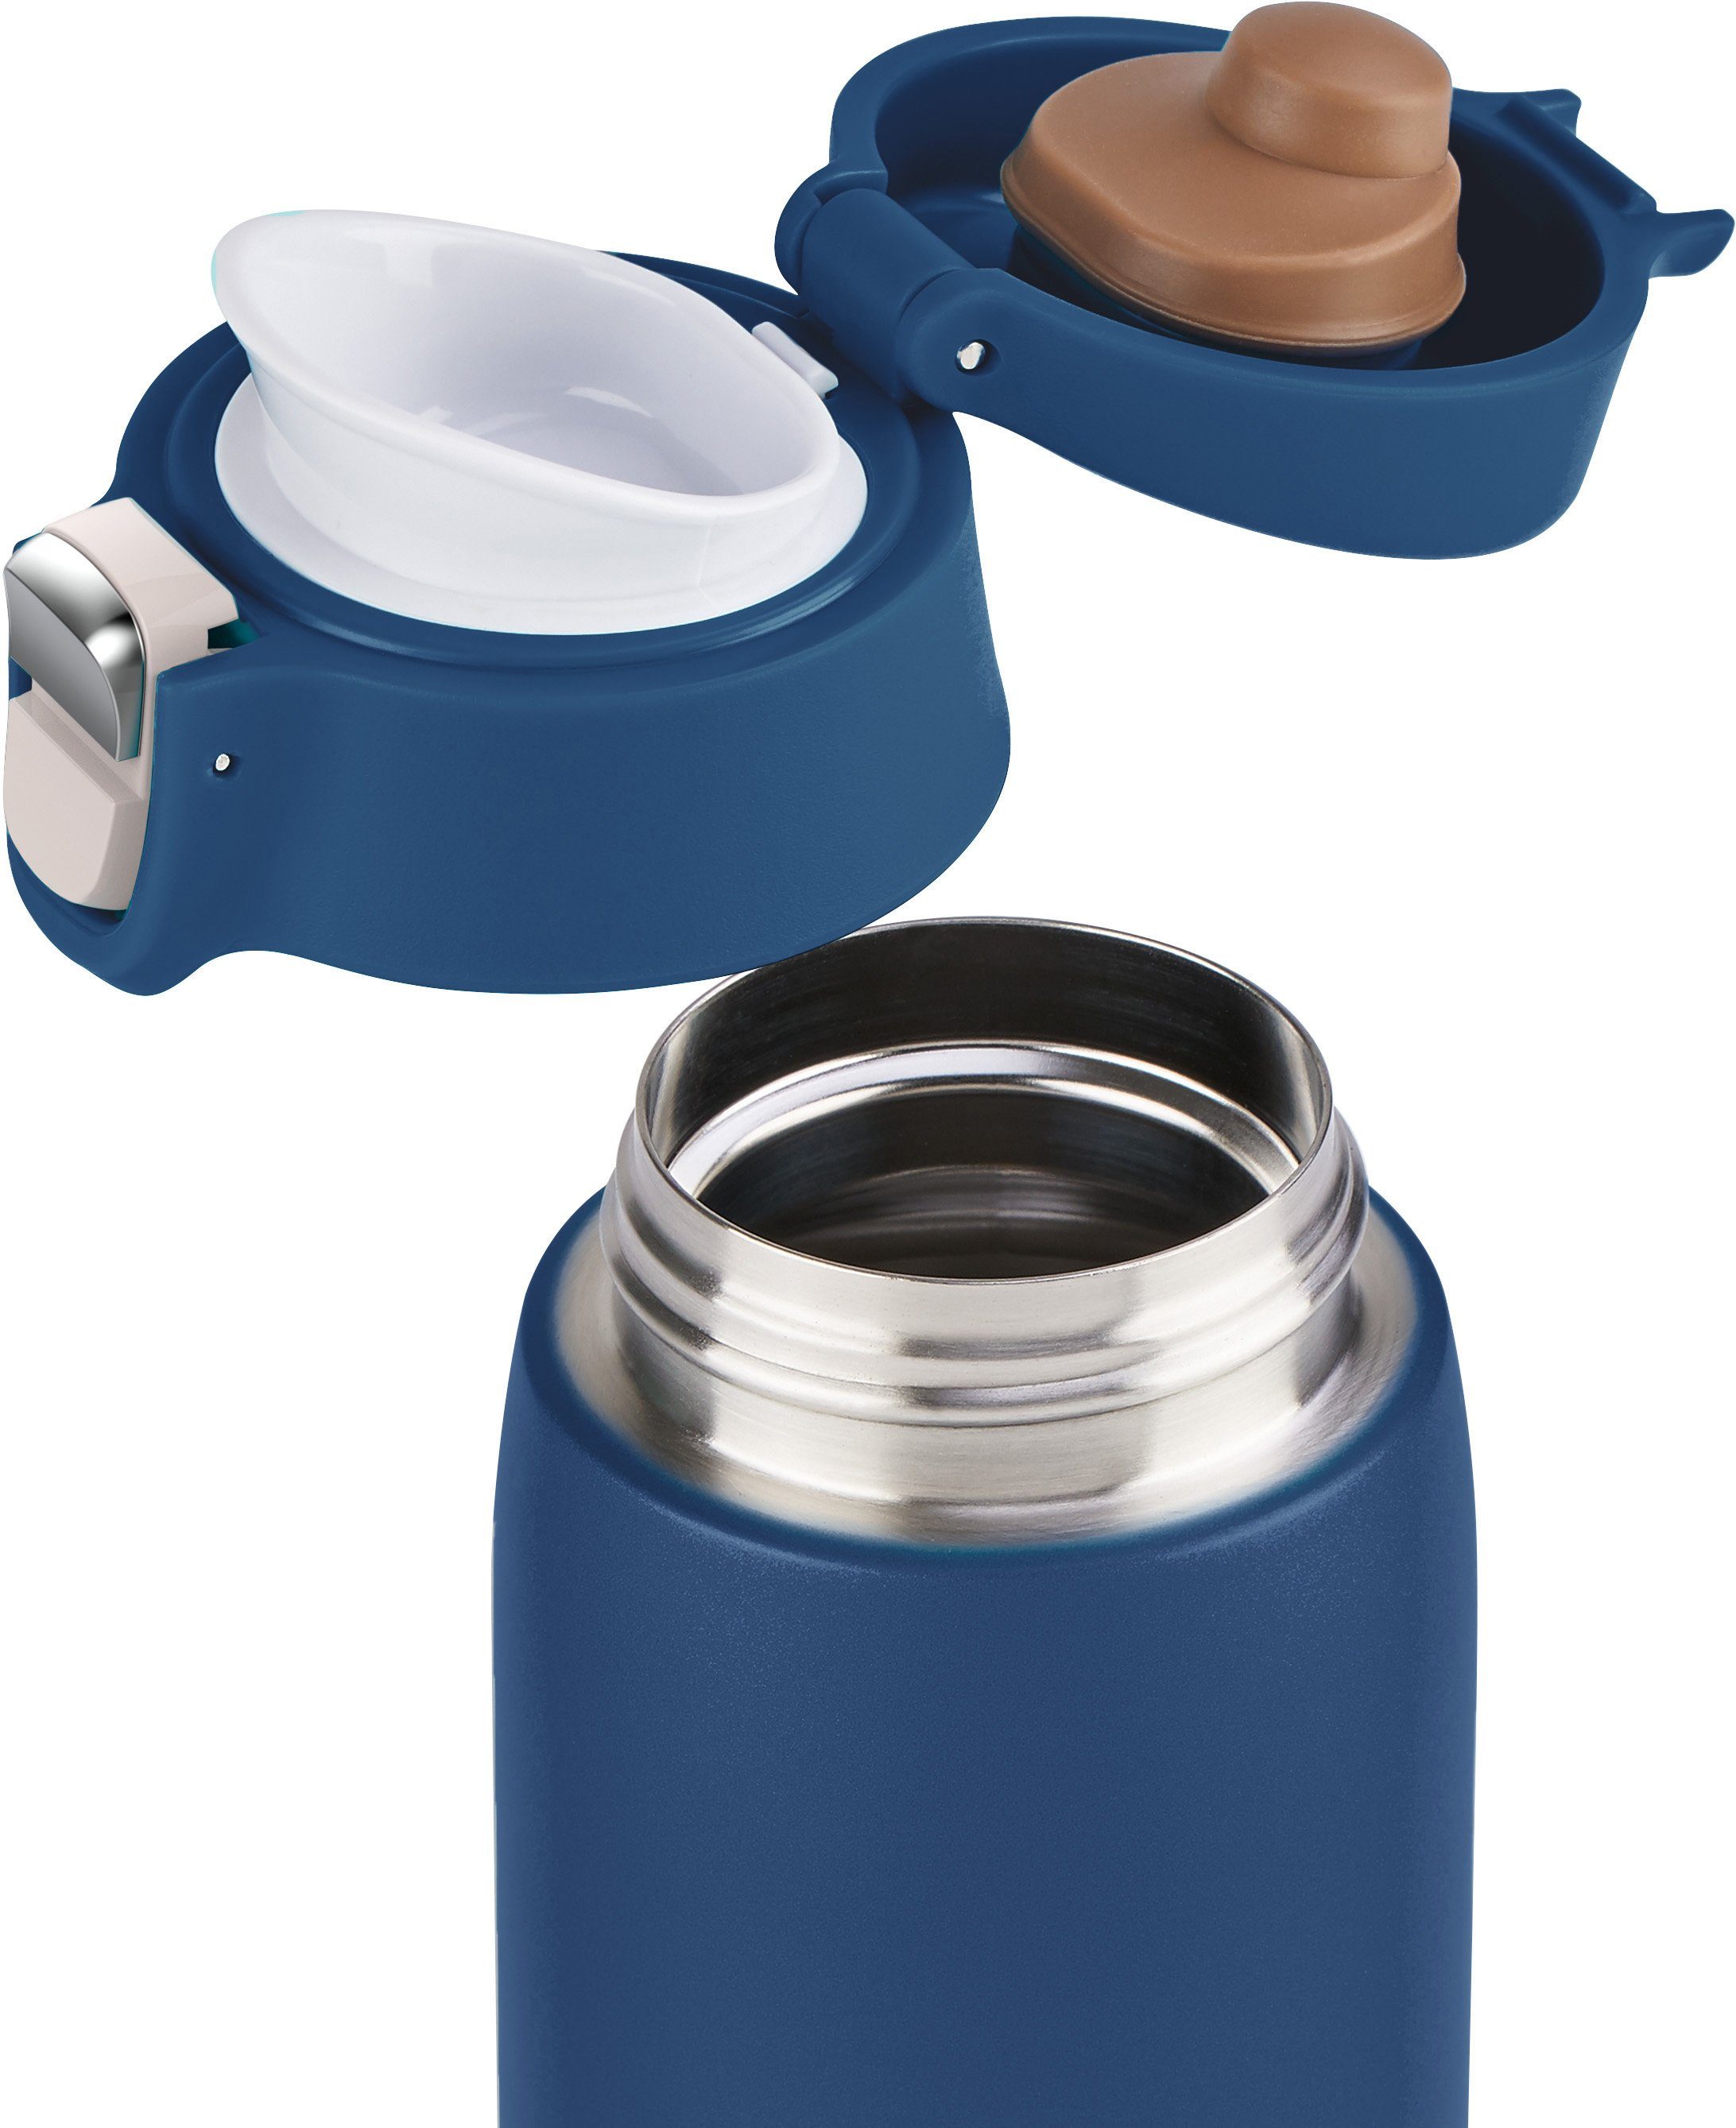 Mug Kunststoff, Light, dicht, Edelstahl, 8h blau 100% Emsa Thermobecher warm/16h Travel kalt 0,4L, Edelstahl,